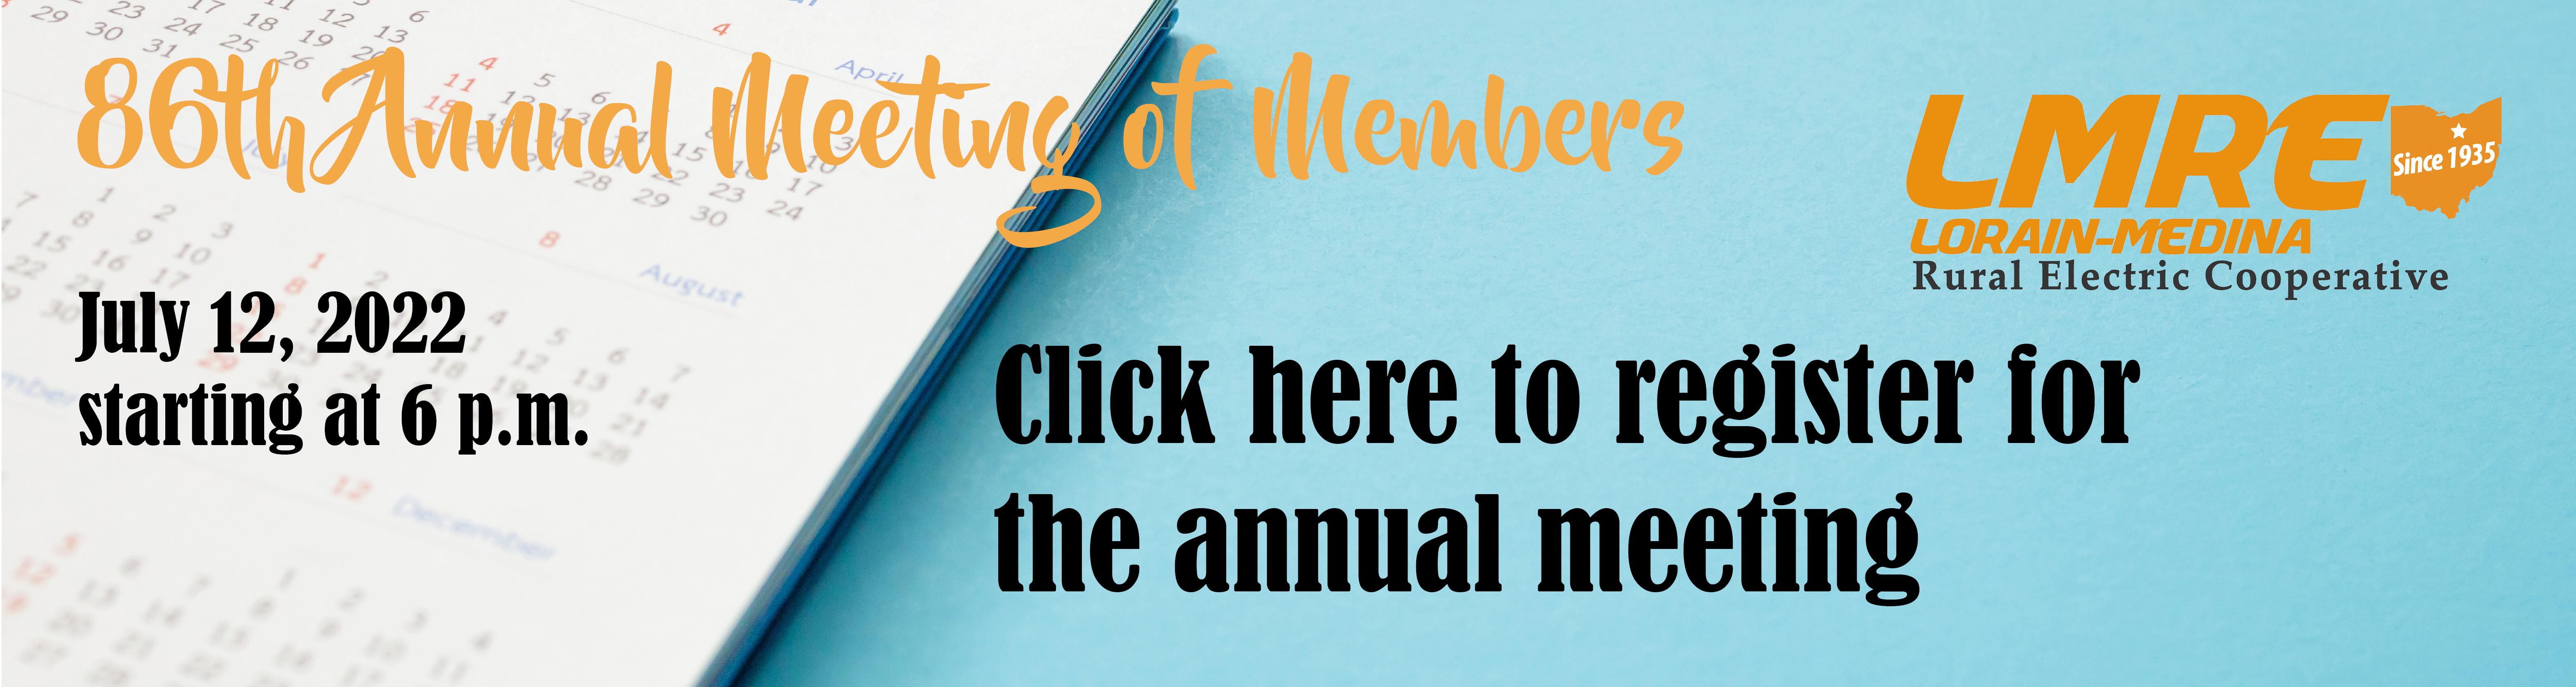 LMRE Annual Meeting Registration 2022